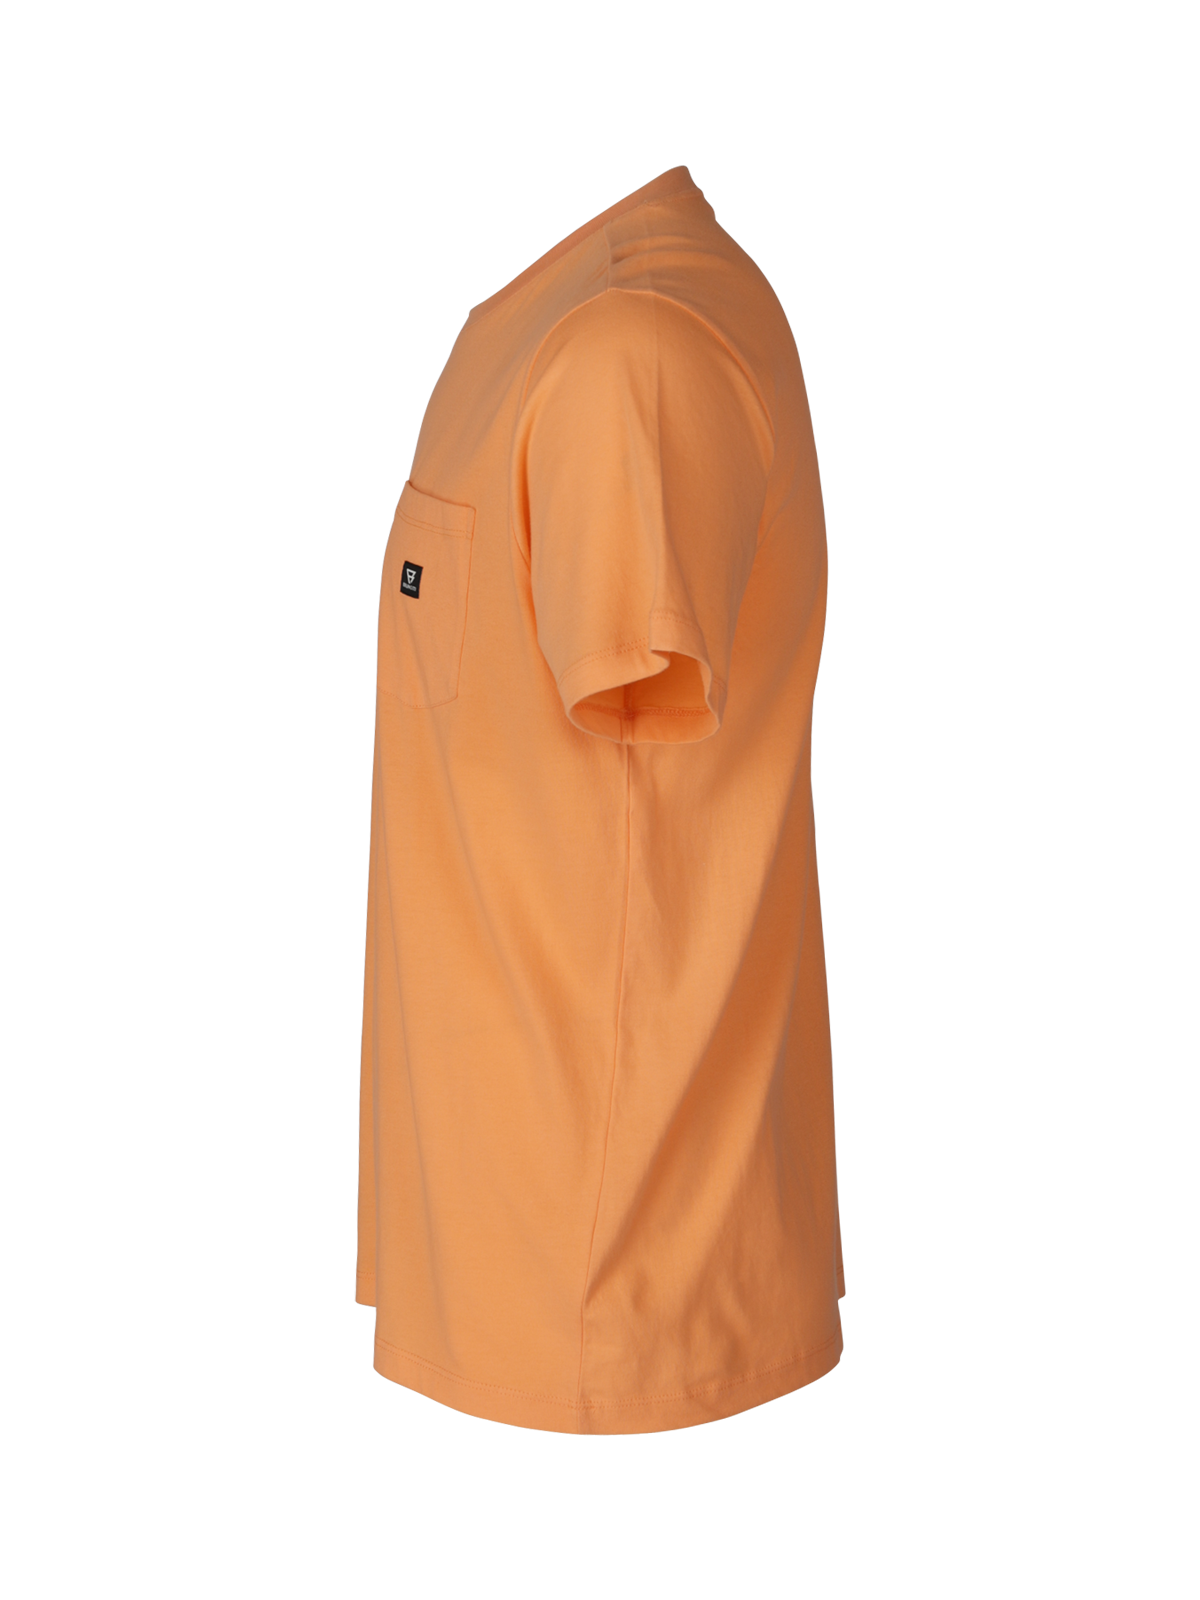 Axle Herren T-Shirt | Orange